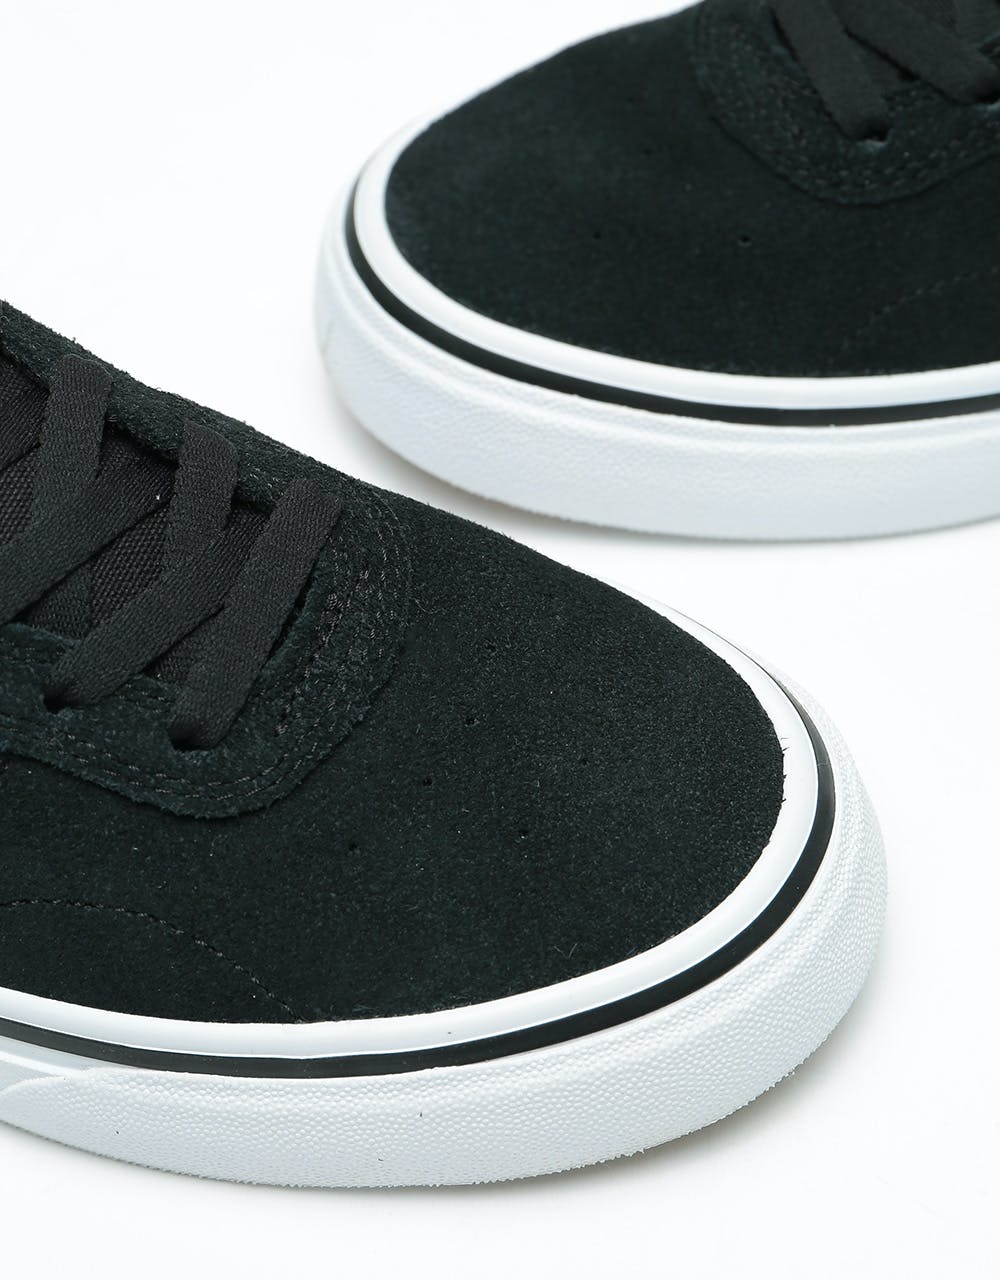 New Balance AM232 Skate Shoes - Black/White